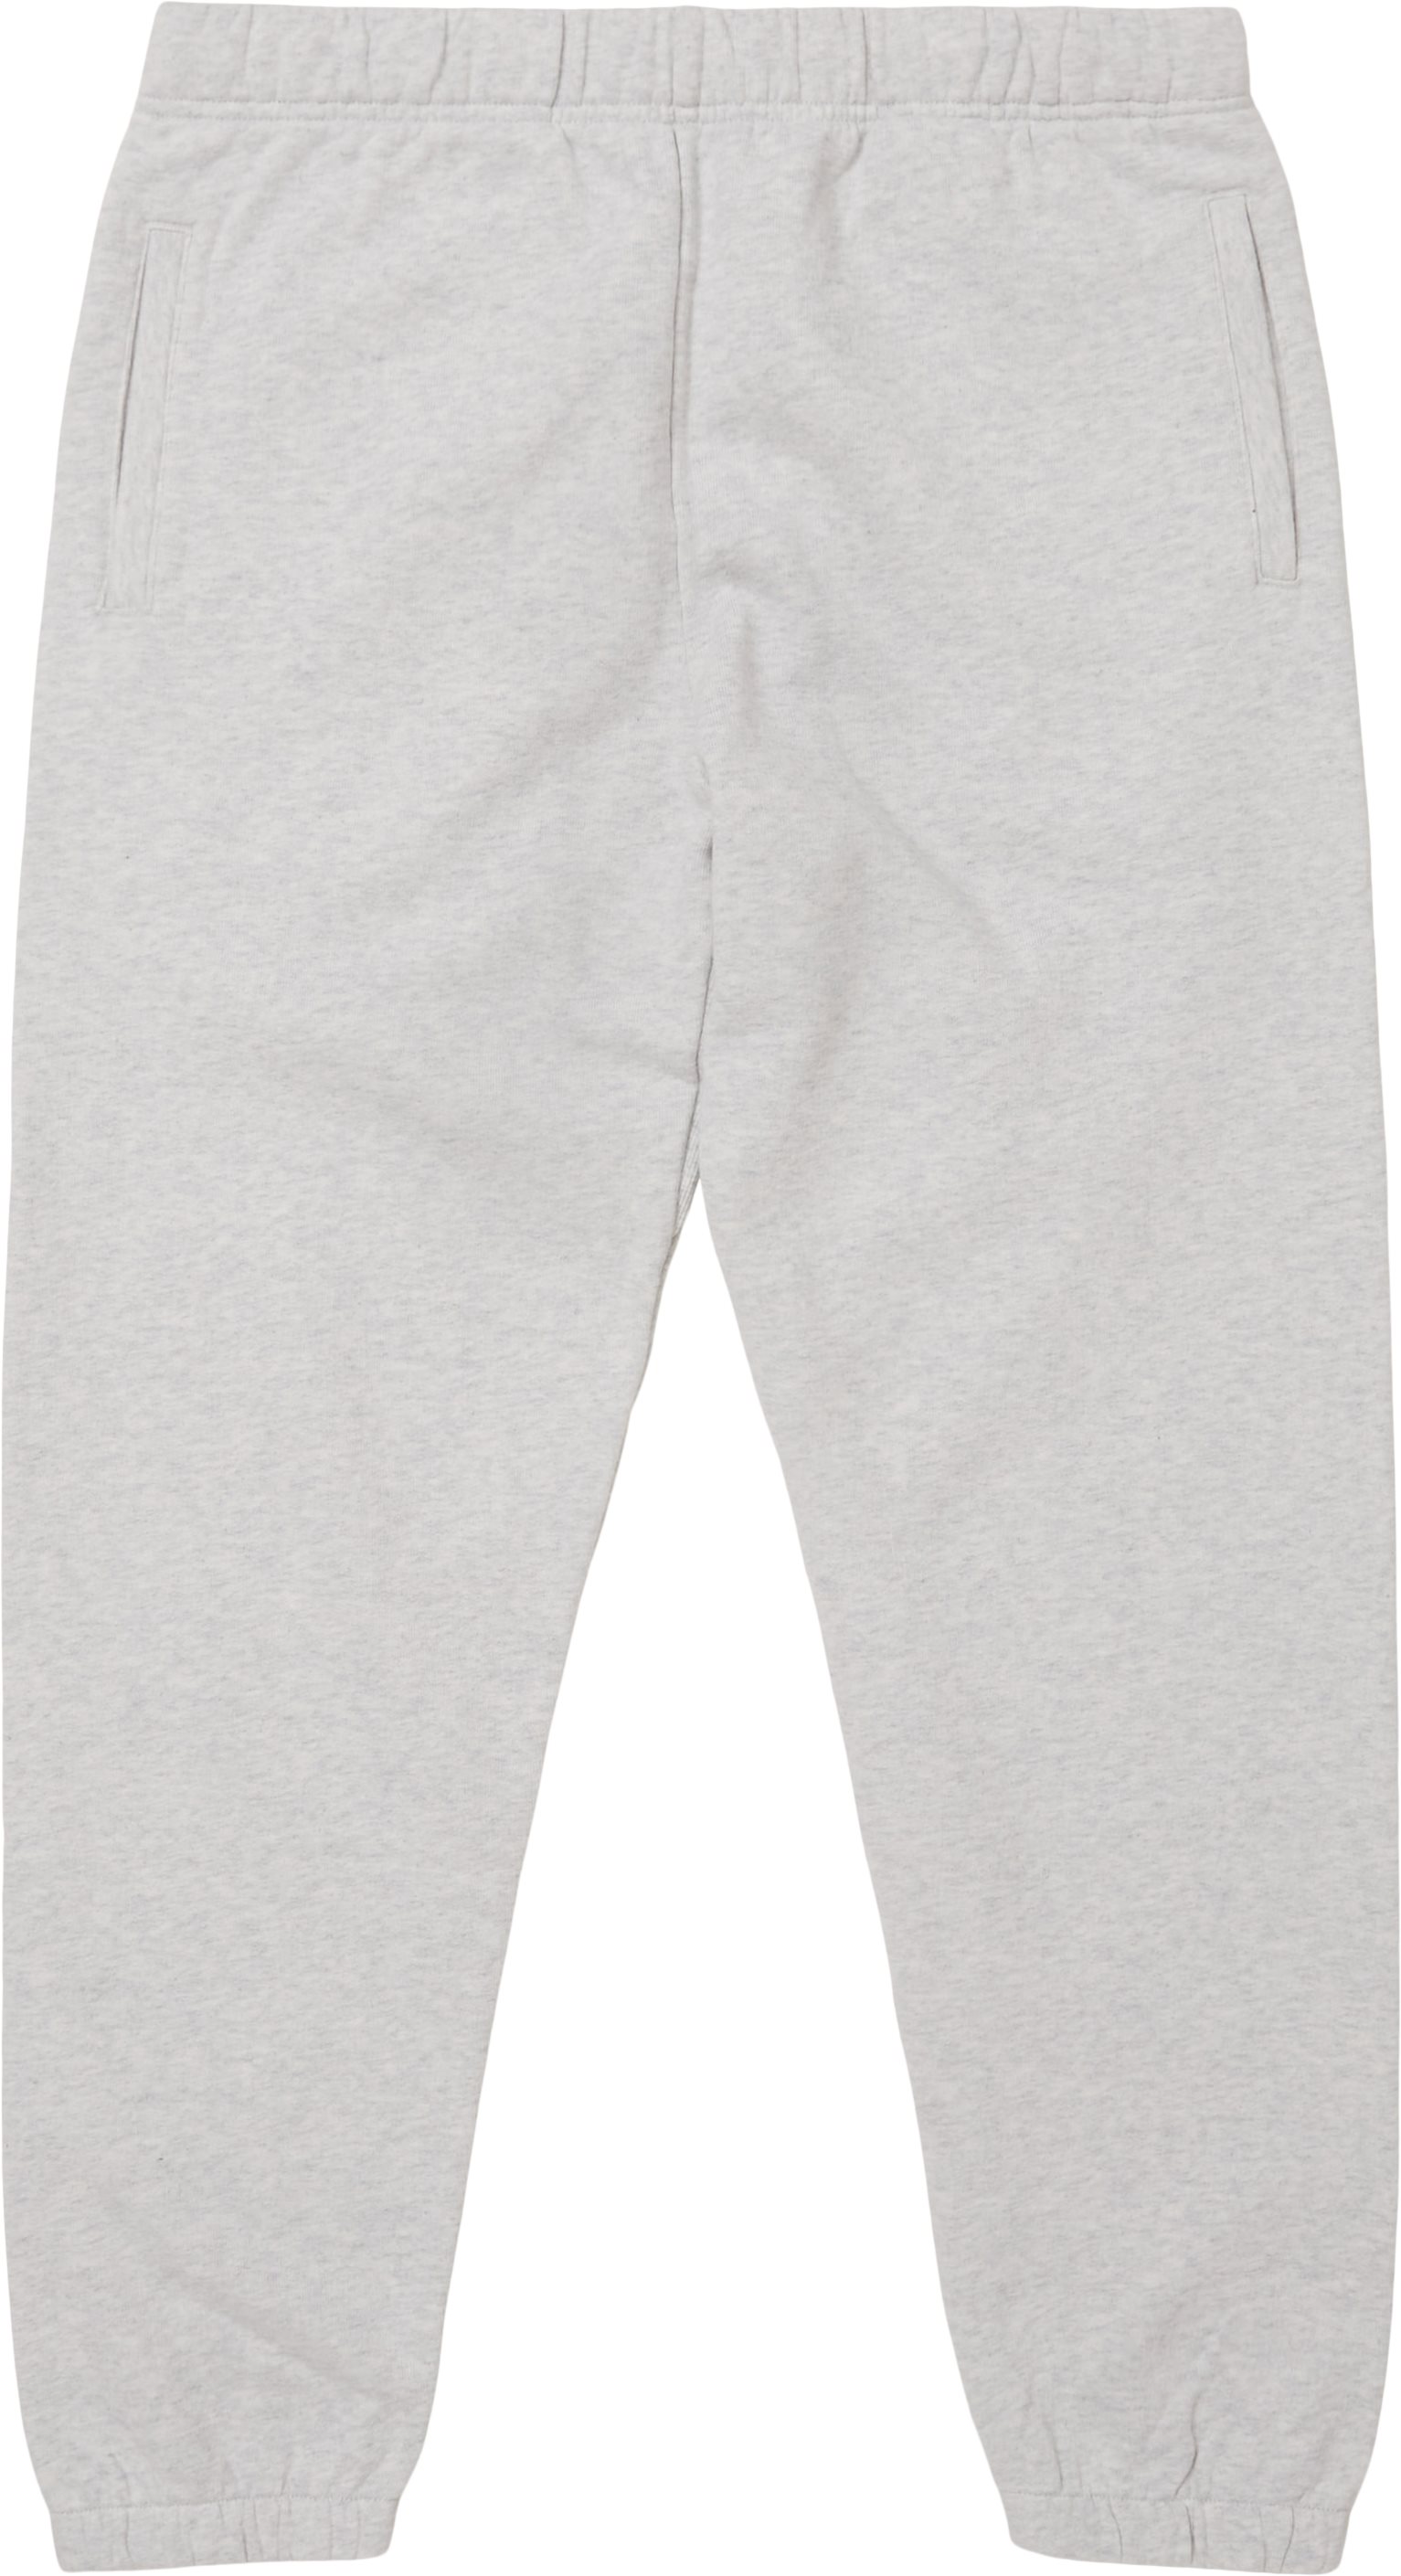 Pocket Sweat Pant I027697 - Trousers - Regular fit - Grey